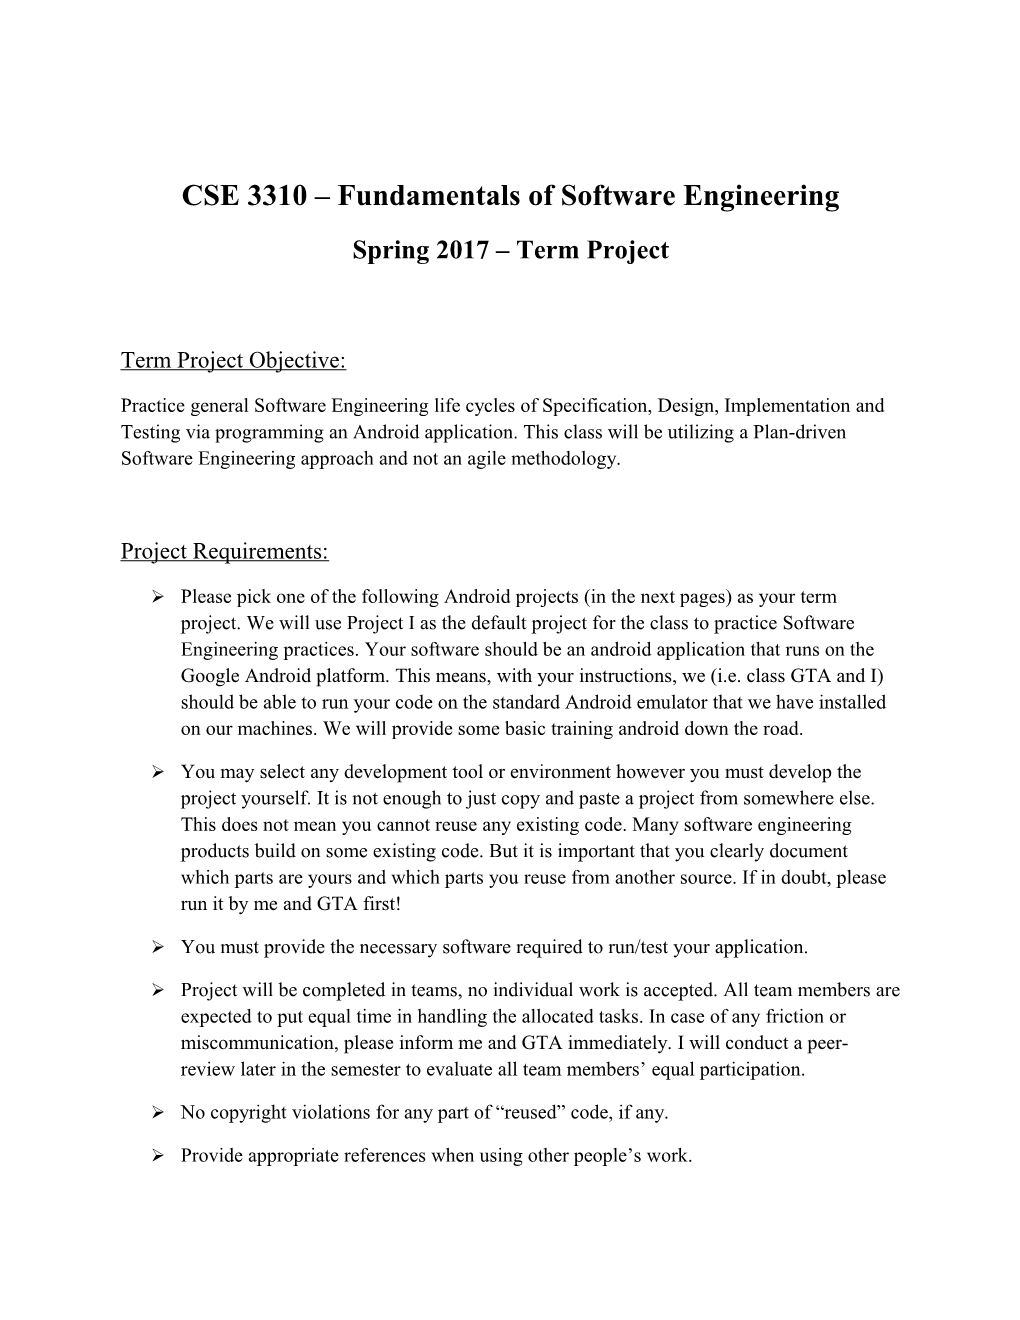 CSE 3310 Fundamentals of Software Engineering